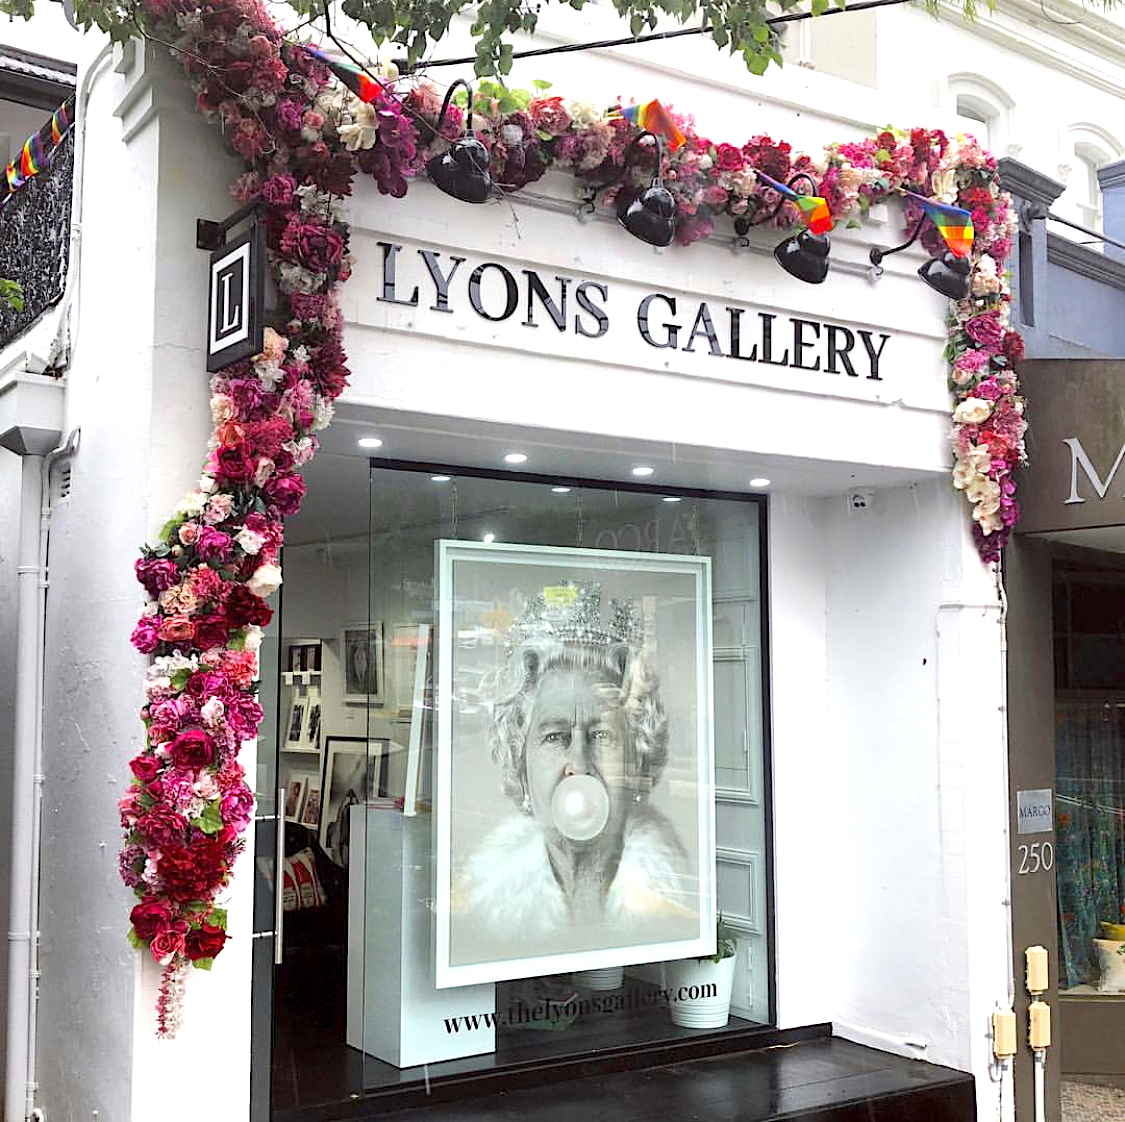 Lyons Gallery